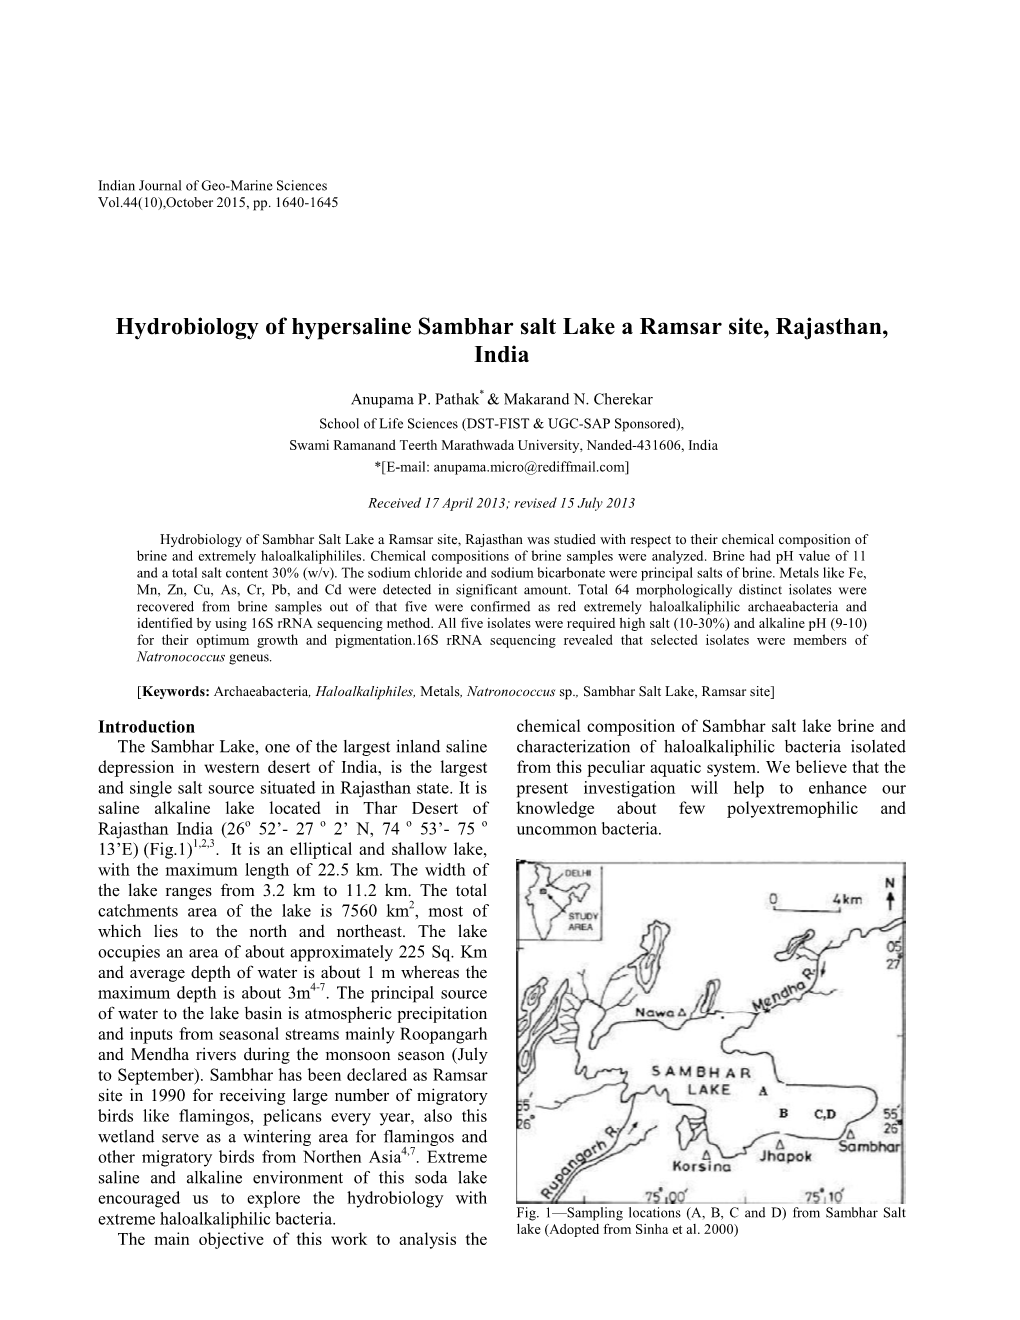 Hydrobiology of Hypersaline Sambhar Salt Lake a Ramsar Site, Rajasthan, India